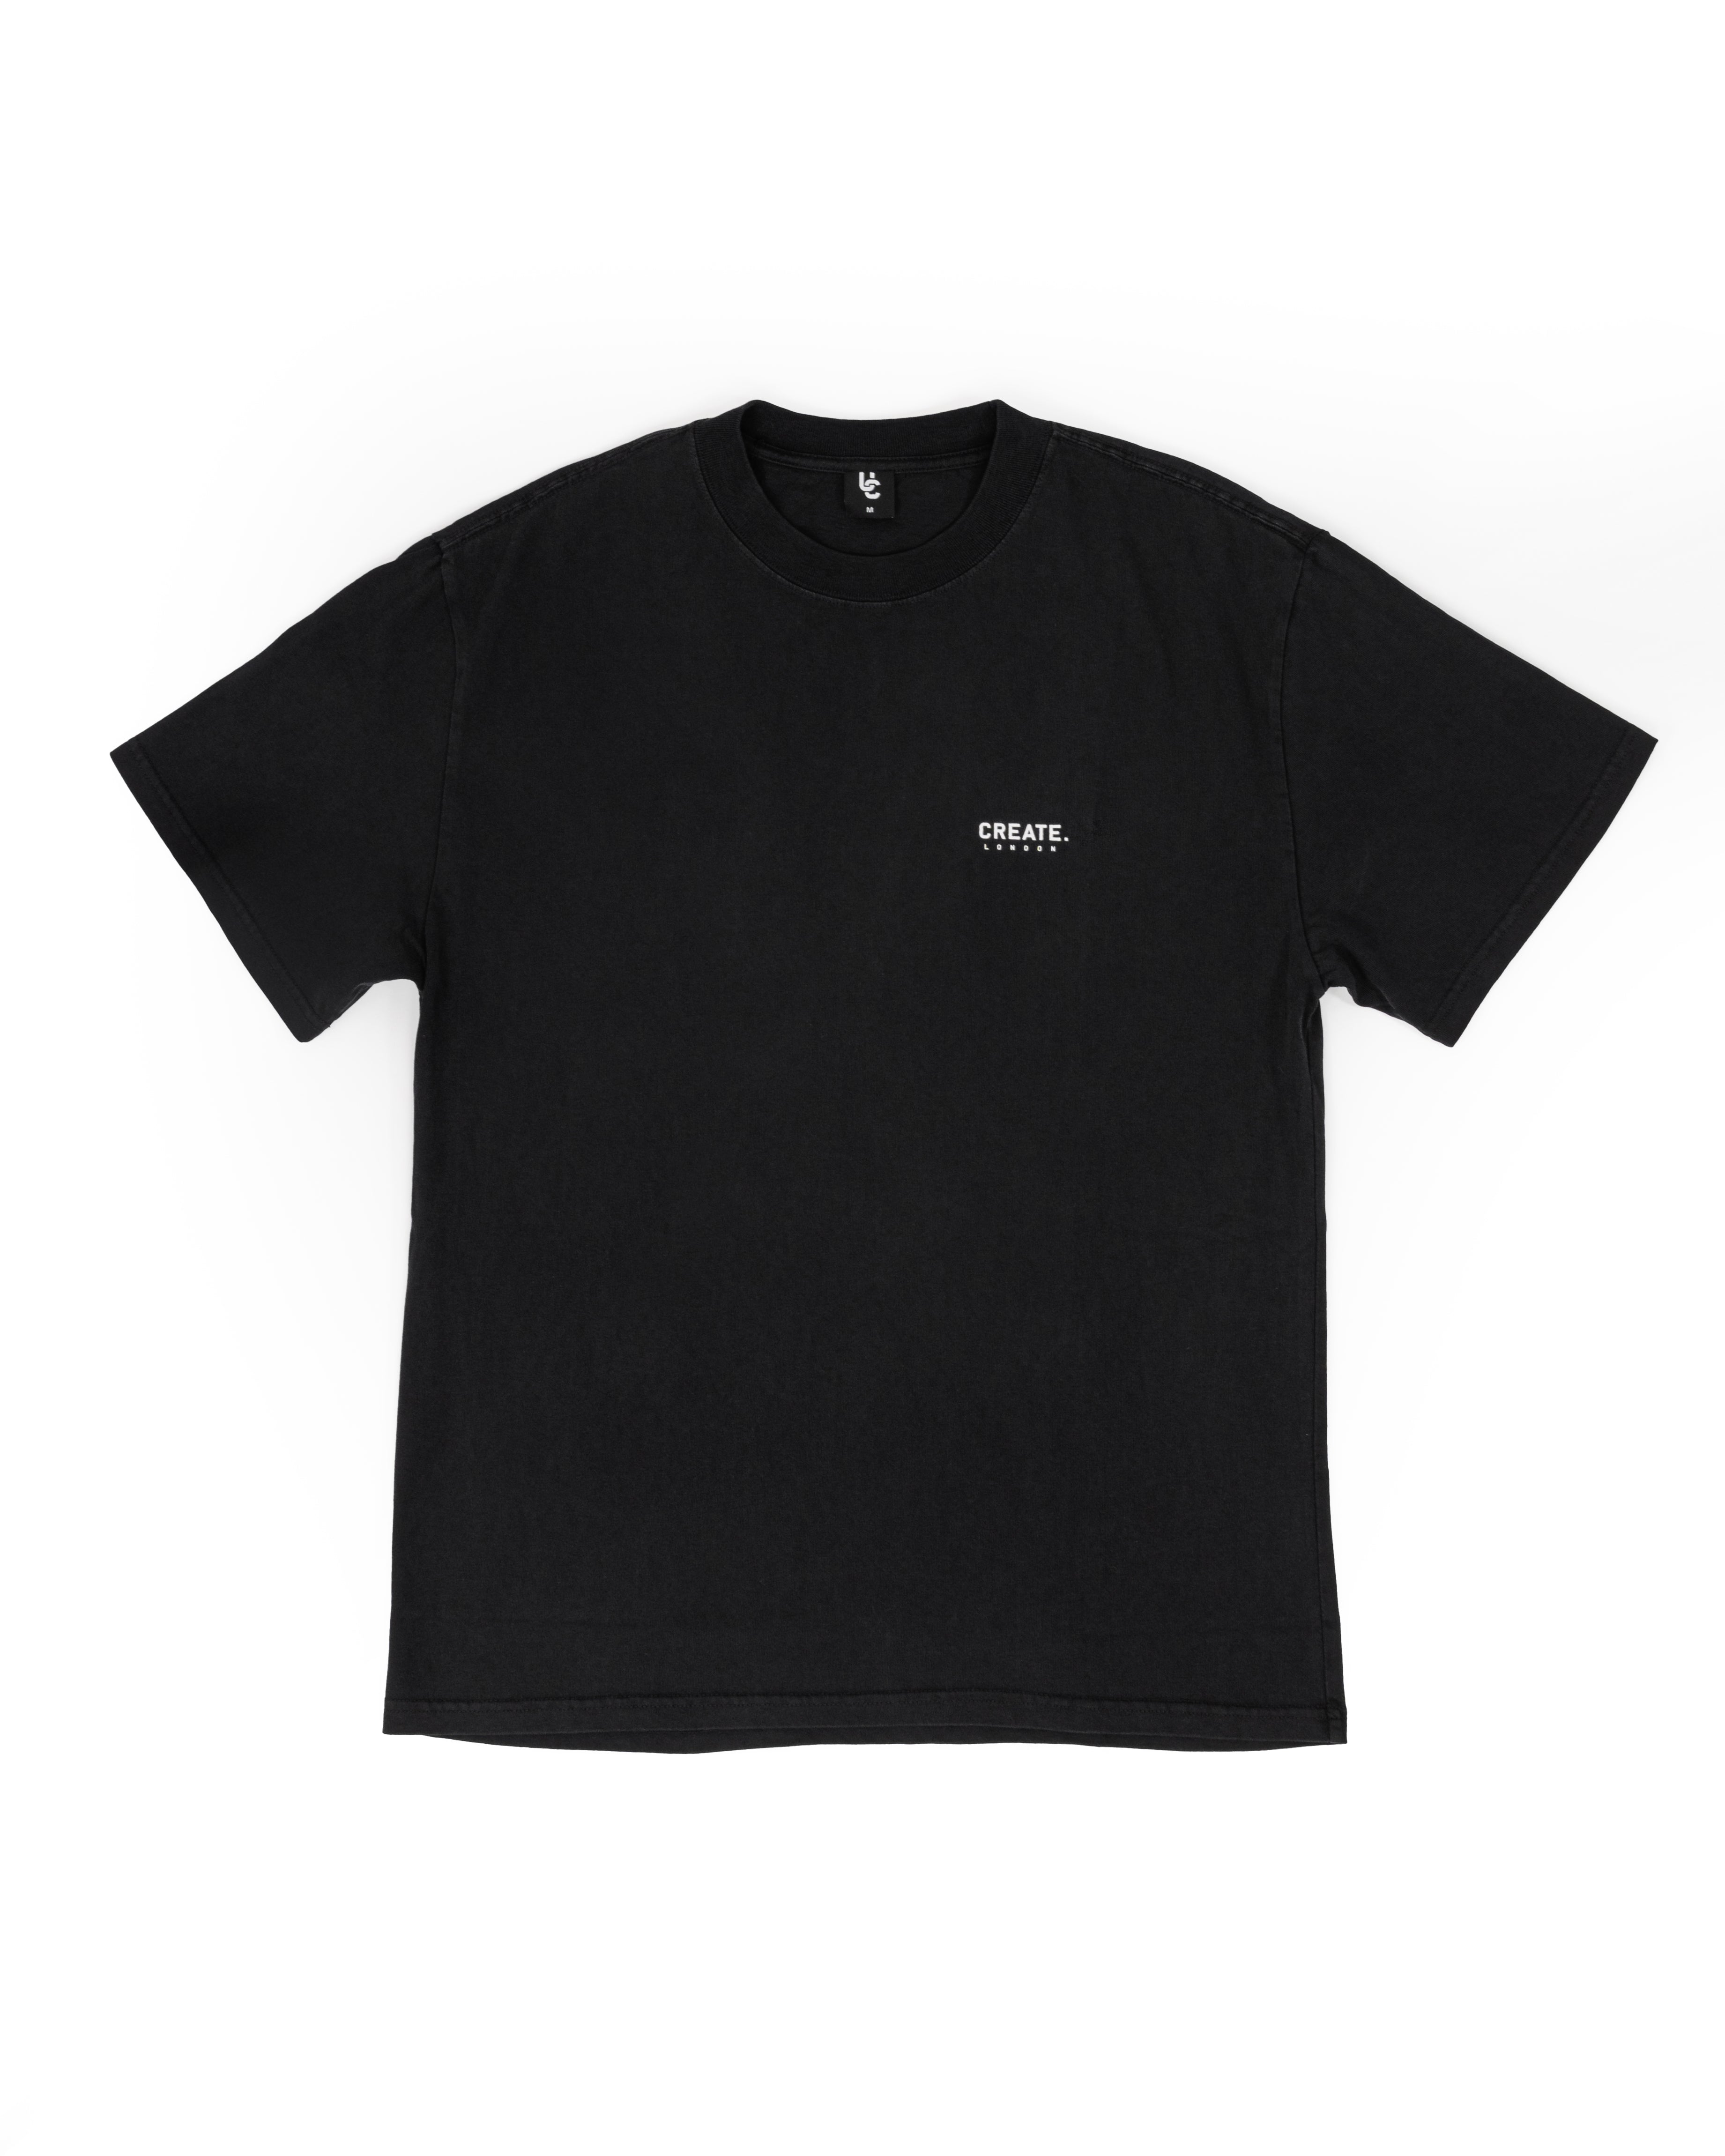 MIA Faded T-Shirt (Black/White)